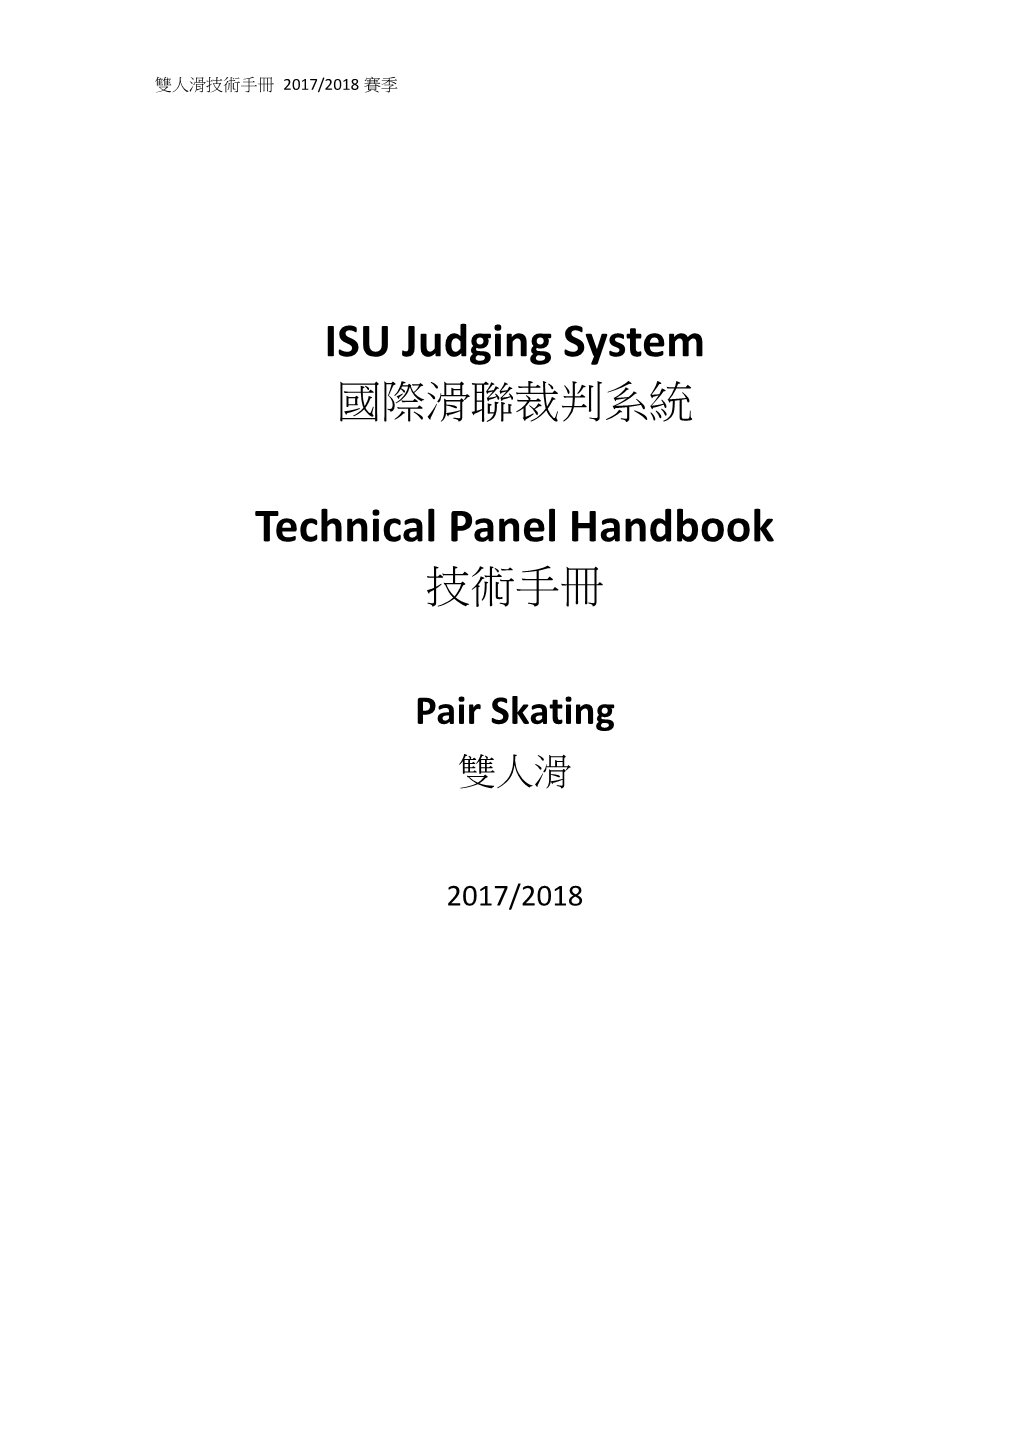 ISU Judging System Technical Panel Handbook